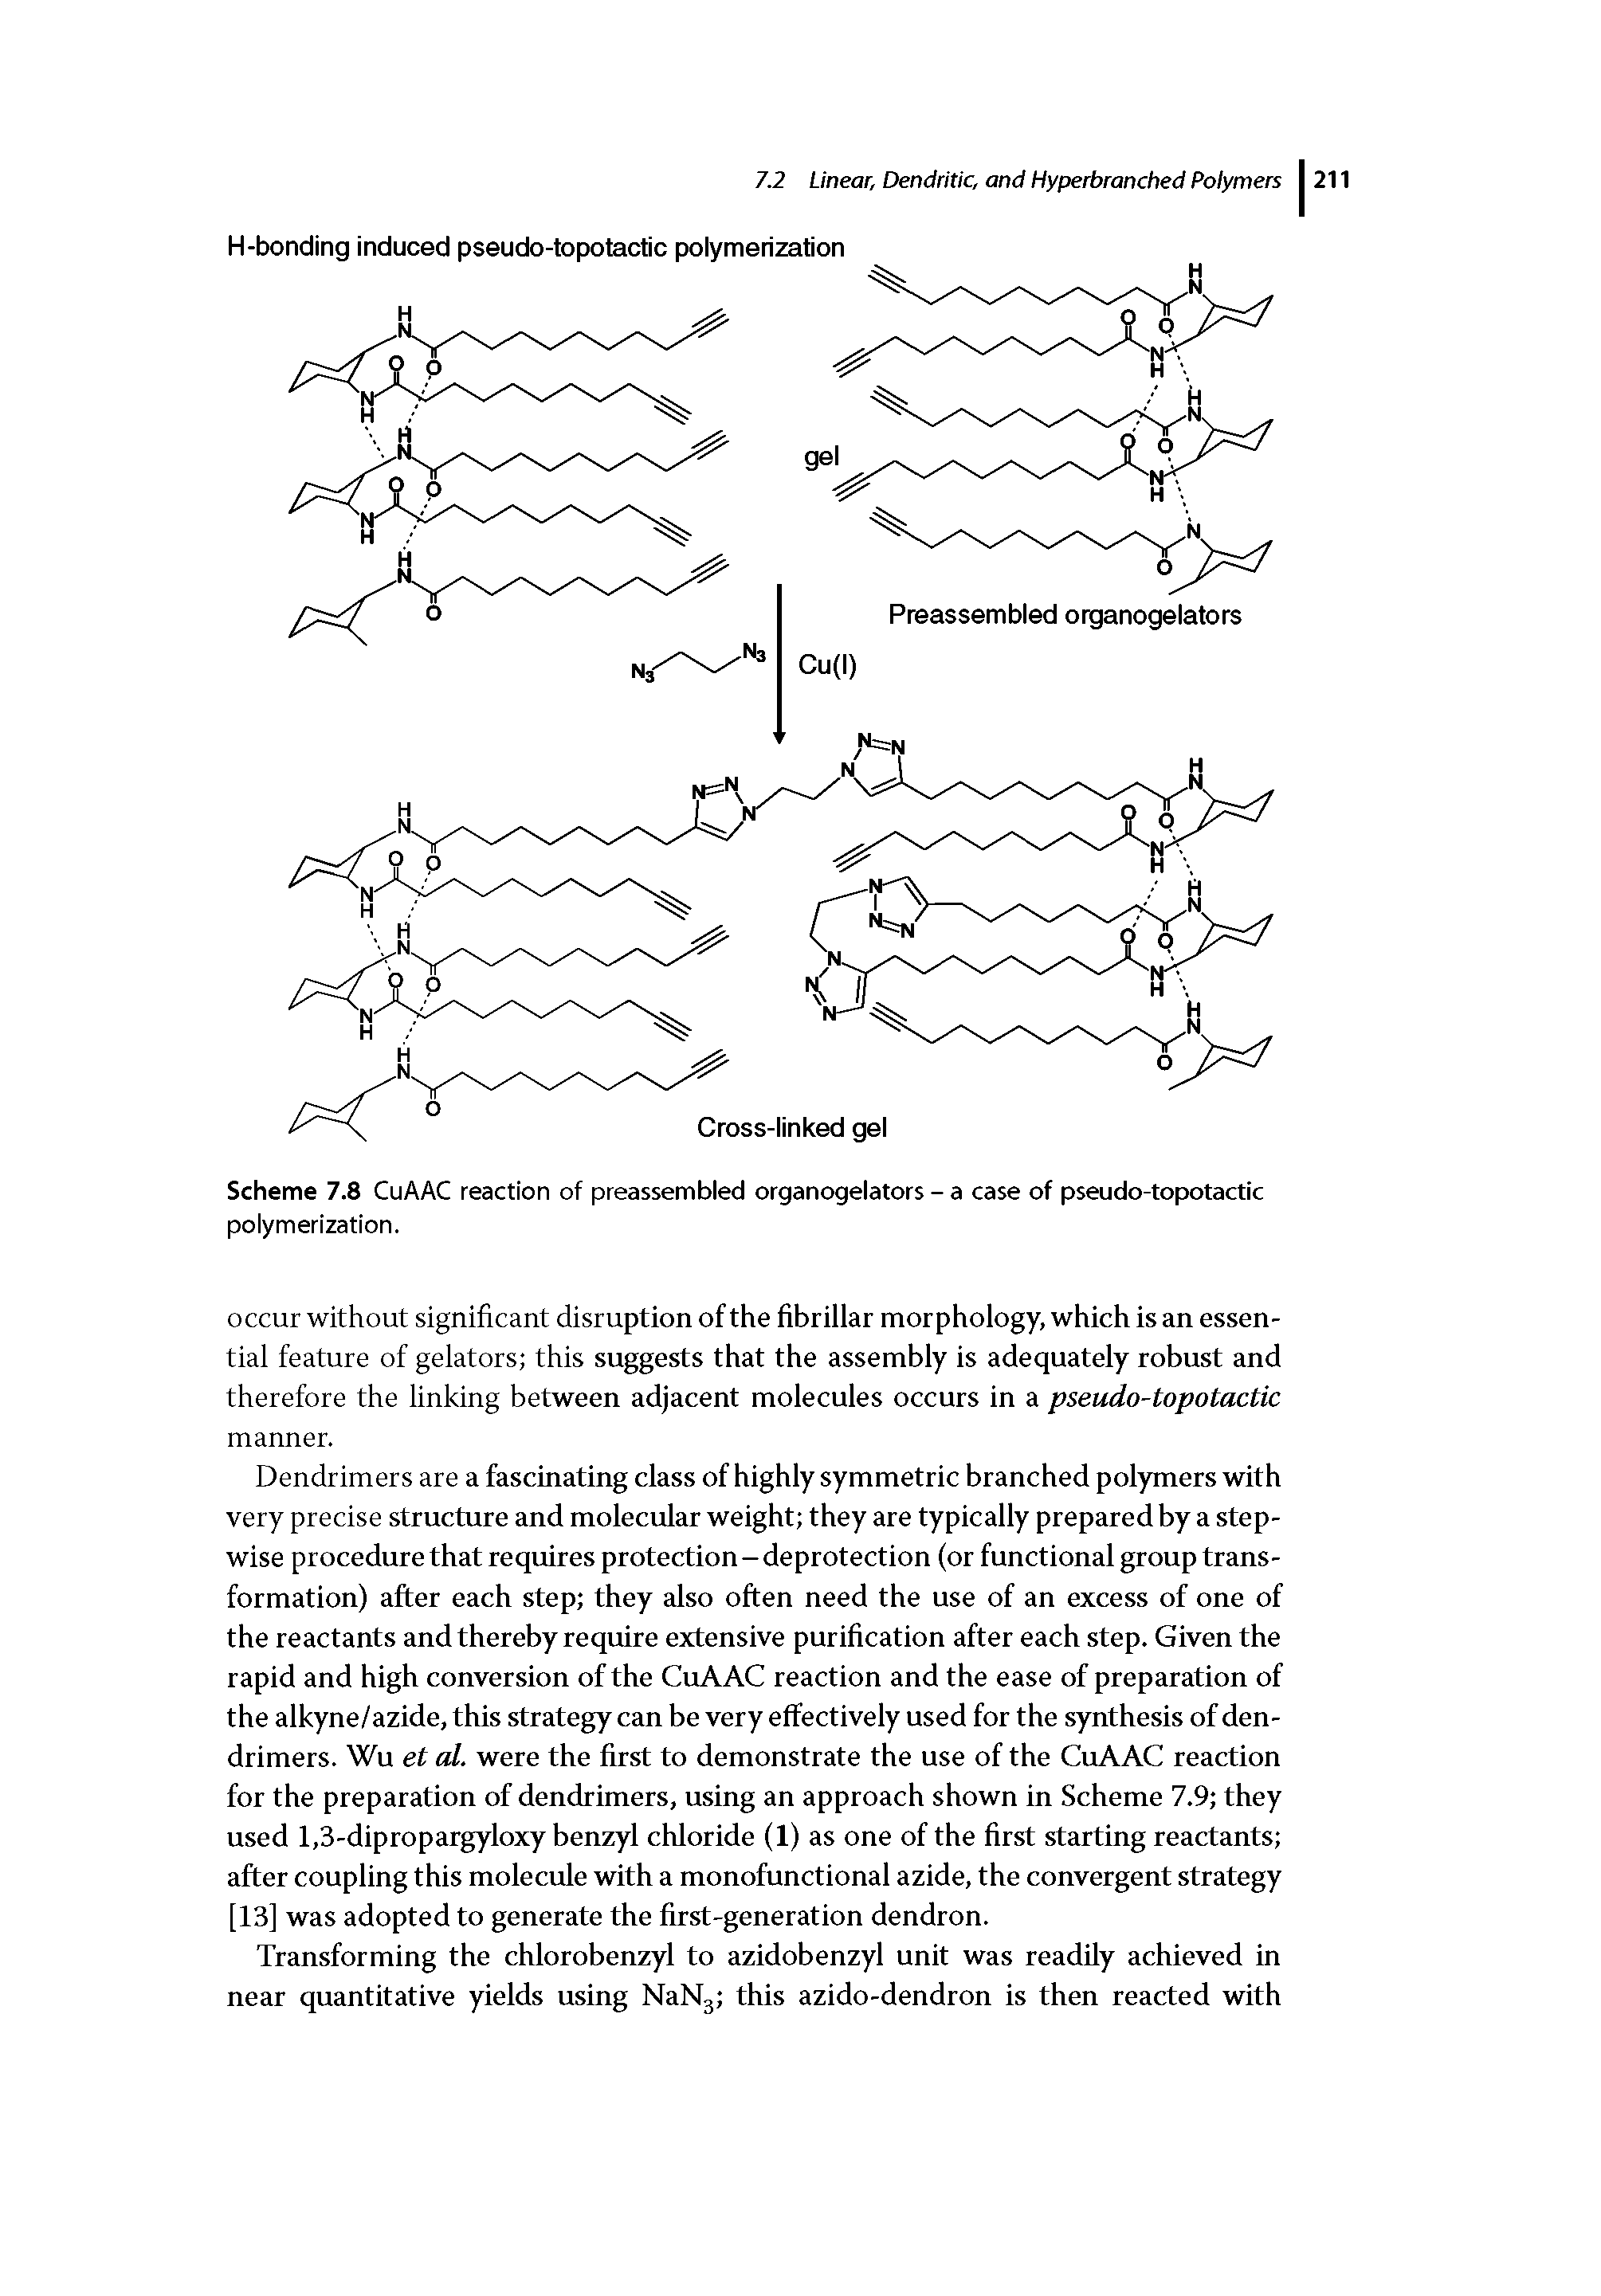 Scheme 7.8 CuAAC reaction of preassembled organogelators - a case of pseudo-topotactic polymerization.